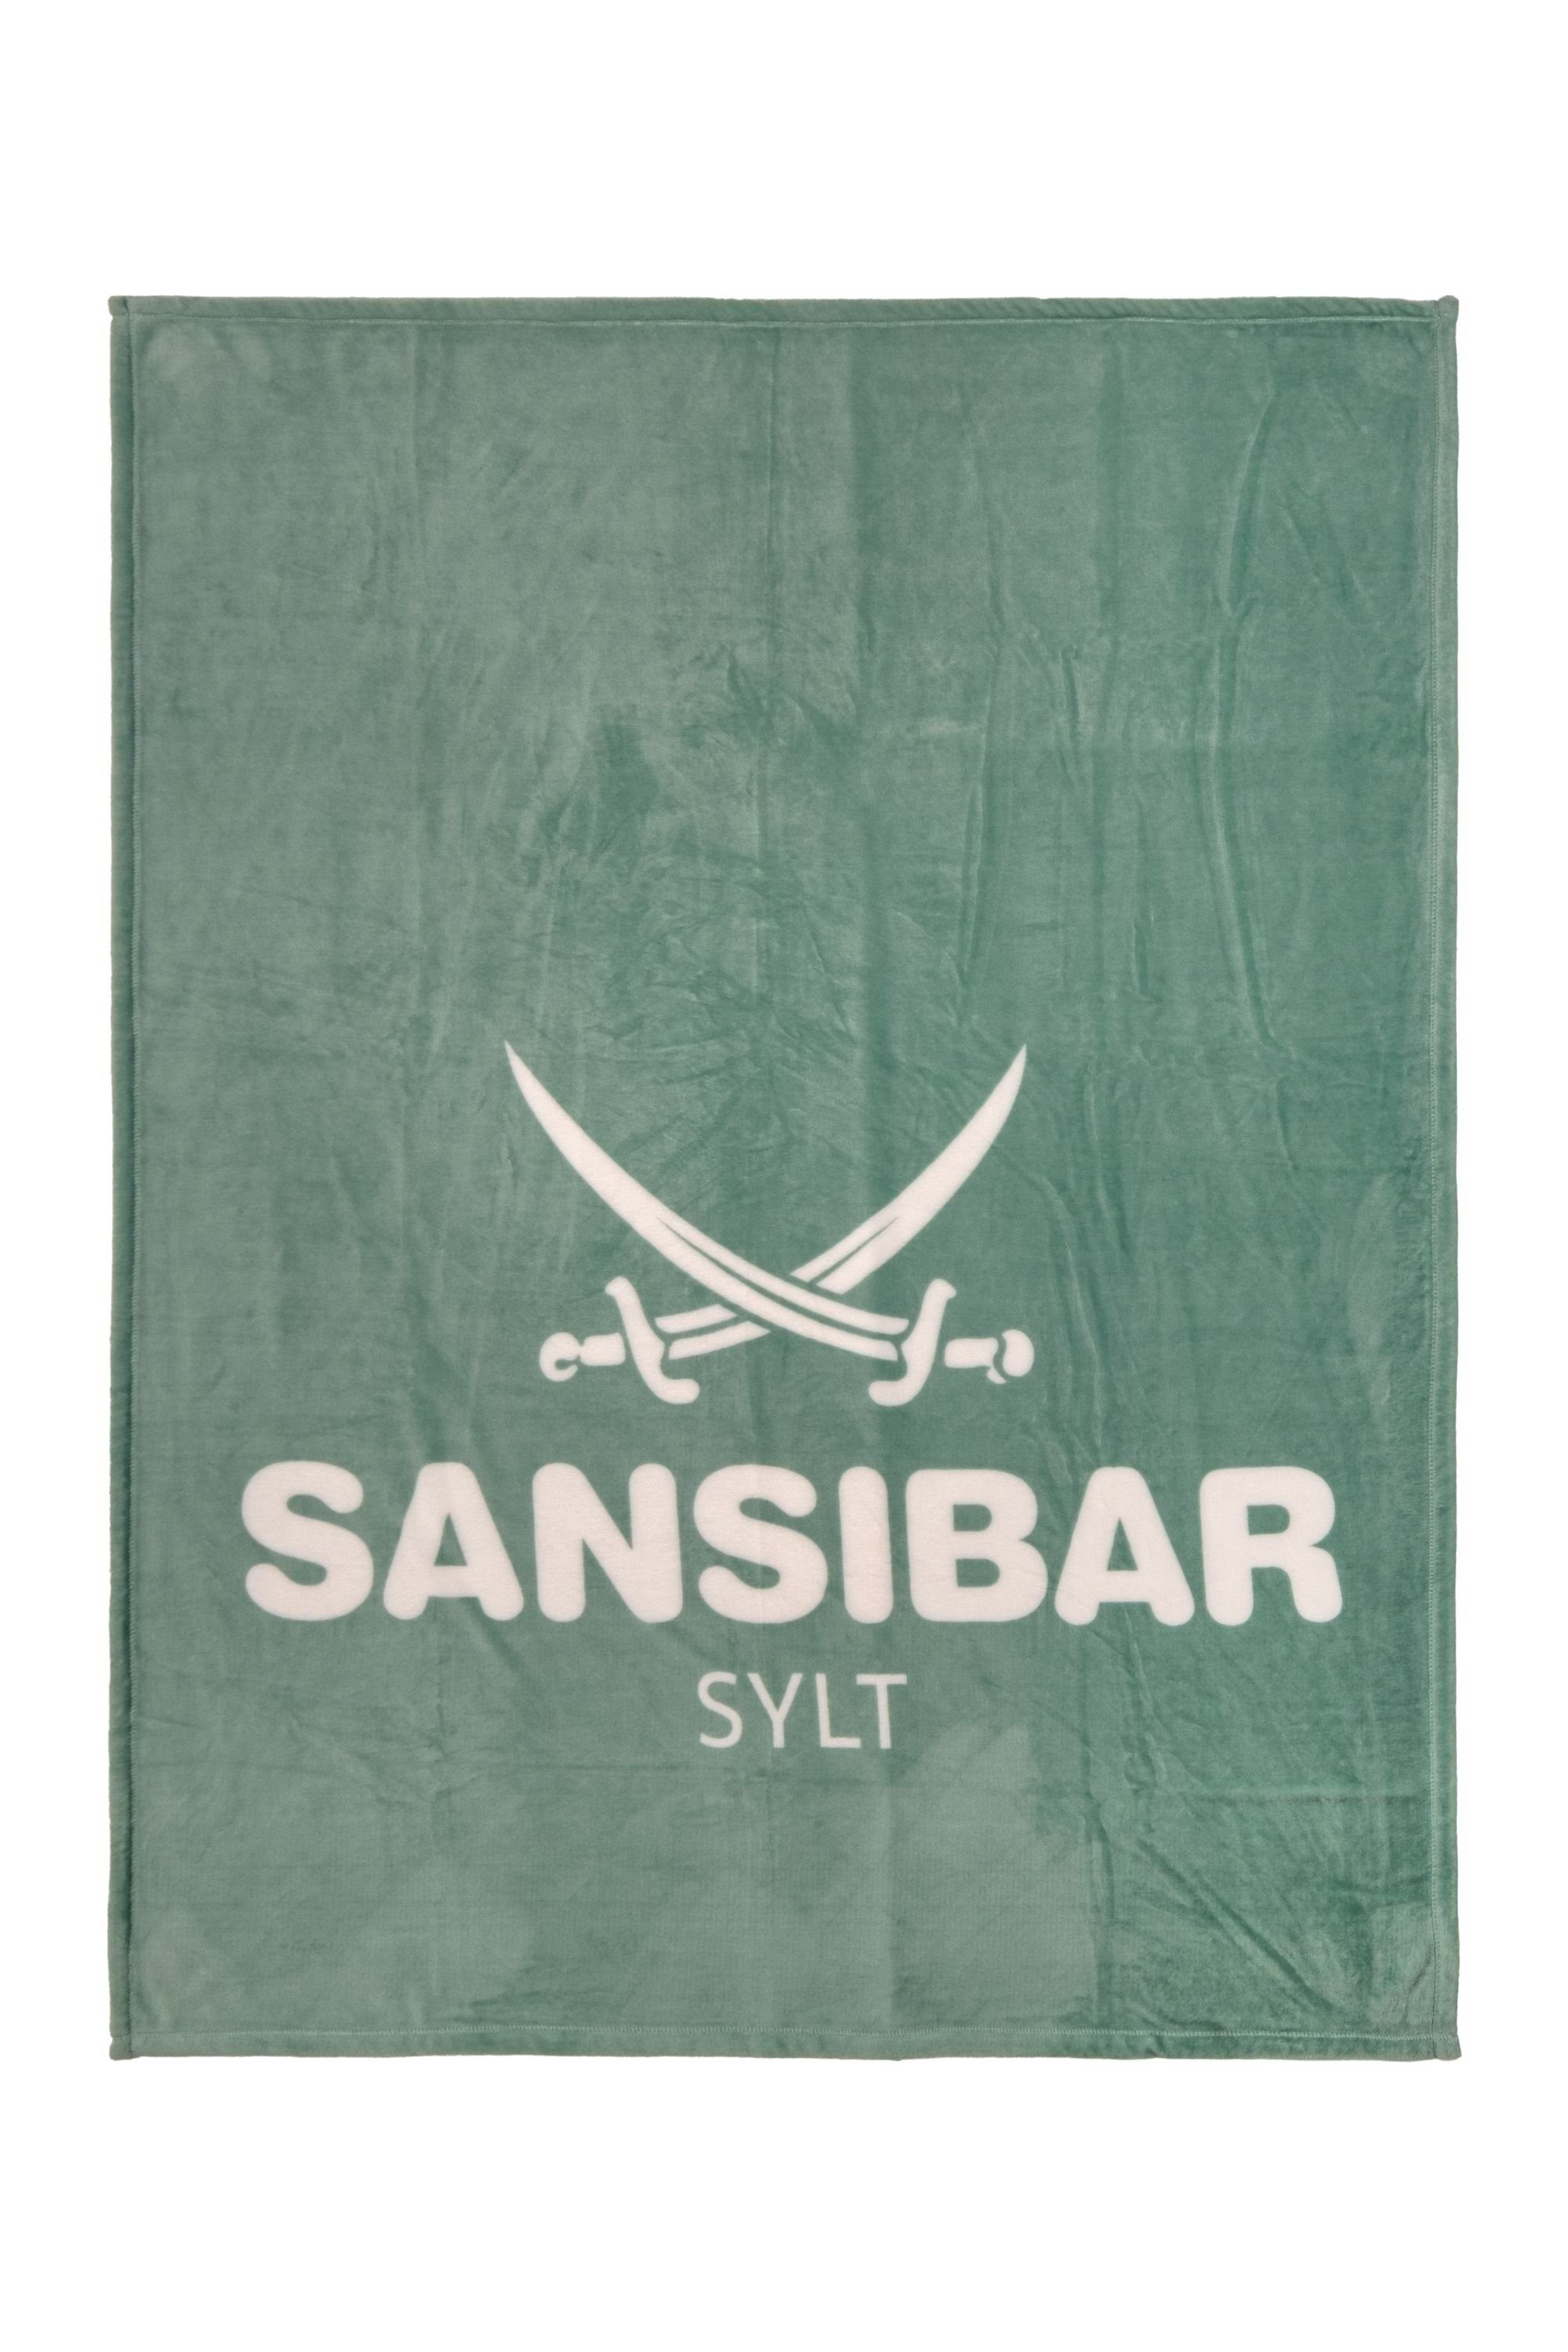 Wohndecke Decke SANSIBAR grün (BL 140x180 cm) BL 140x180 cm grün Wohndecke, Sansibar Sylt